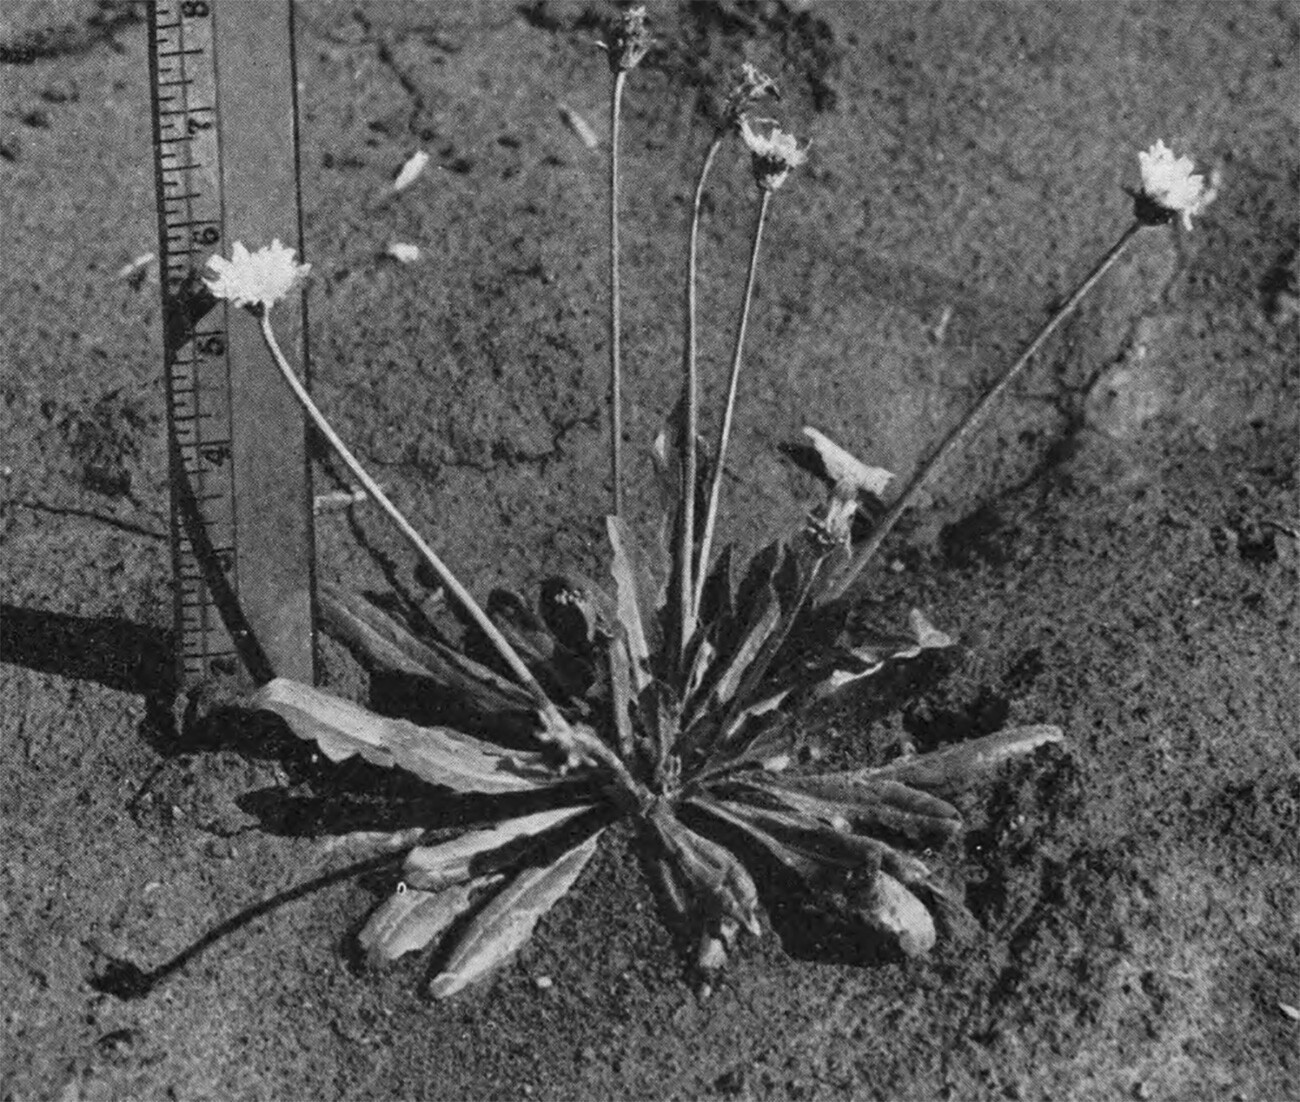 Kok-sagyz is a rubber-bearing plant in the genus Dandelion